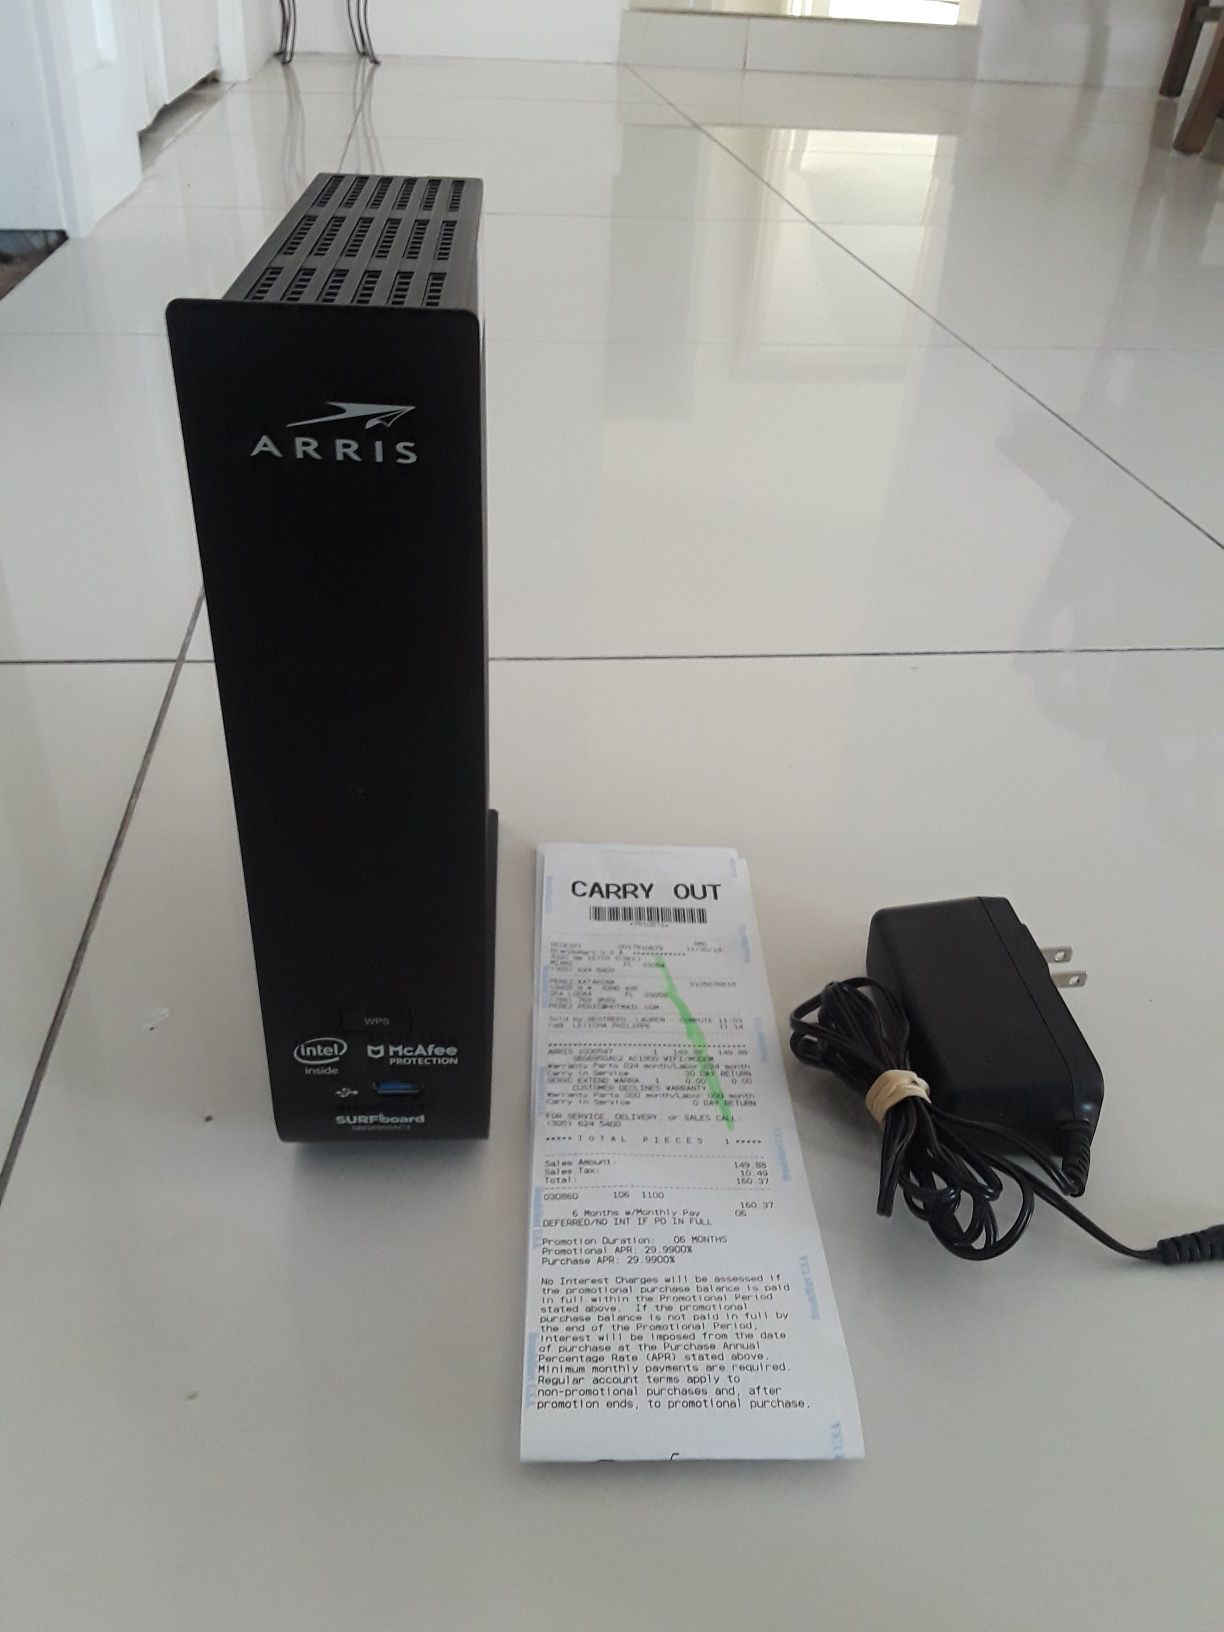 ARRIS Wifi/Modem model SBG6950AC2